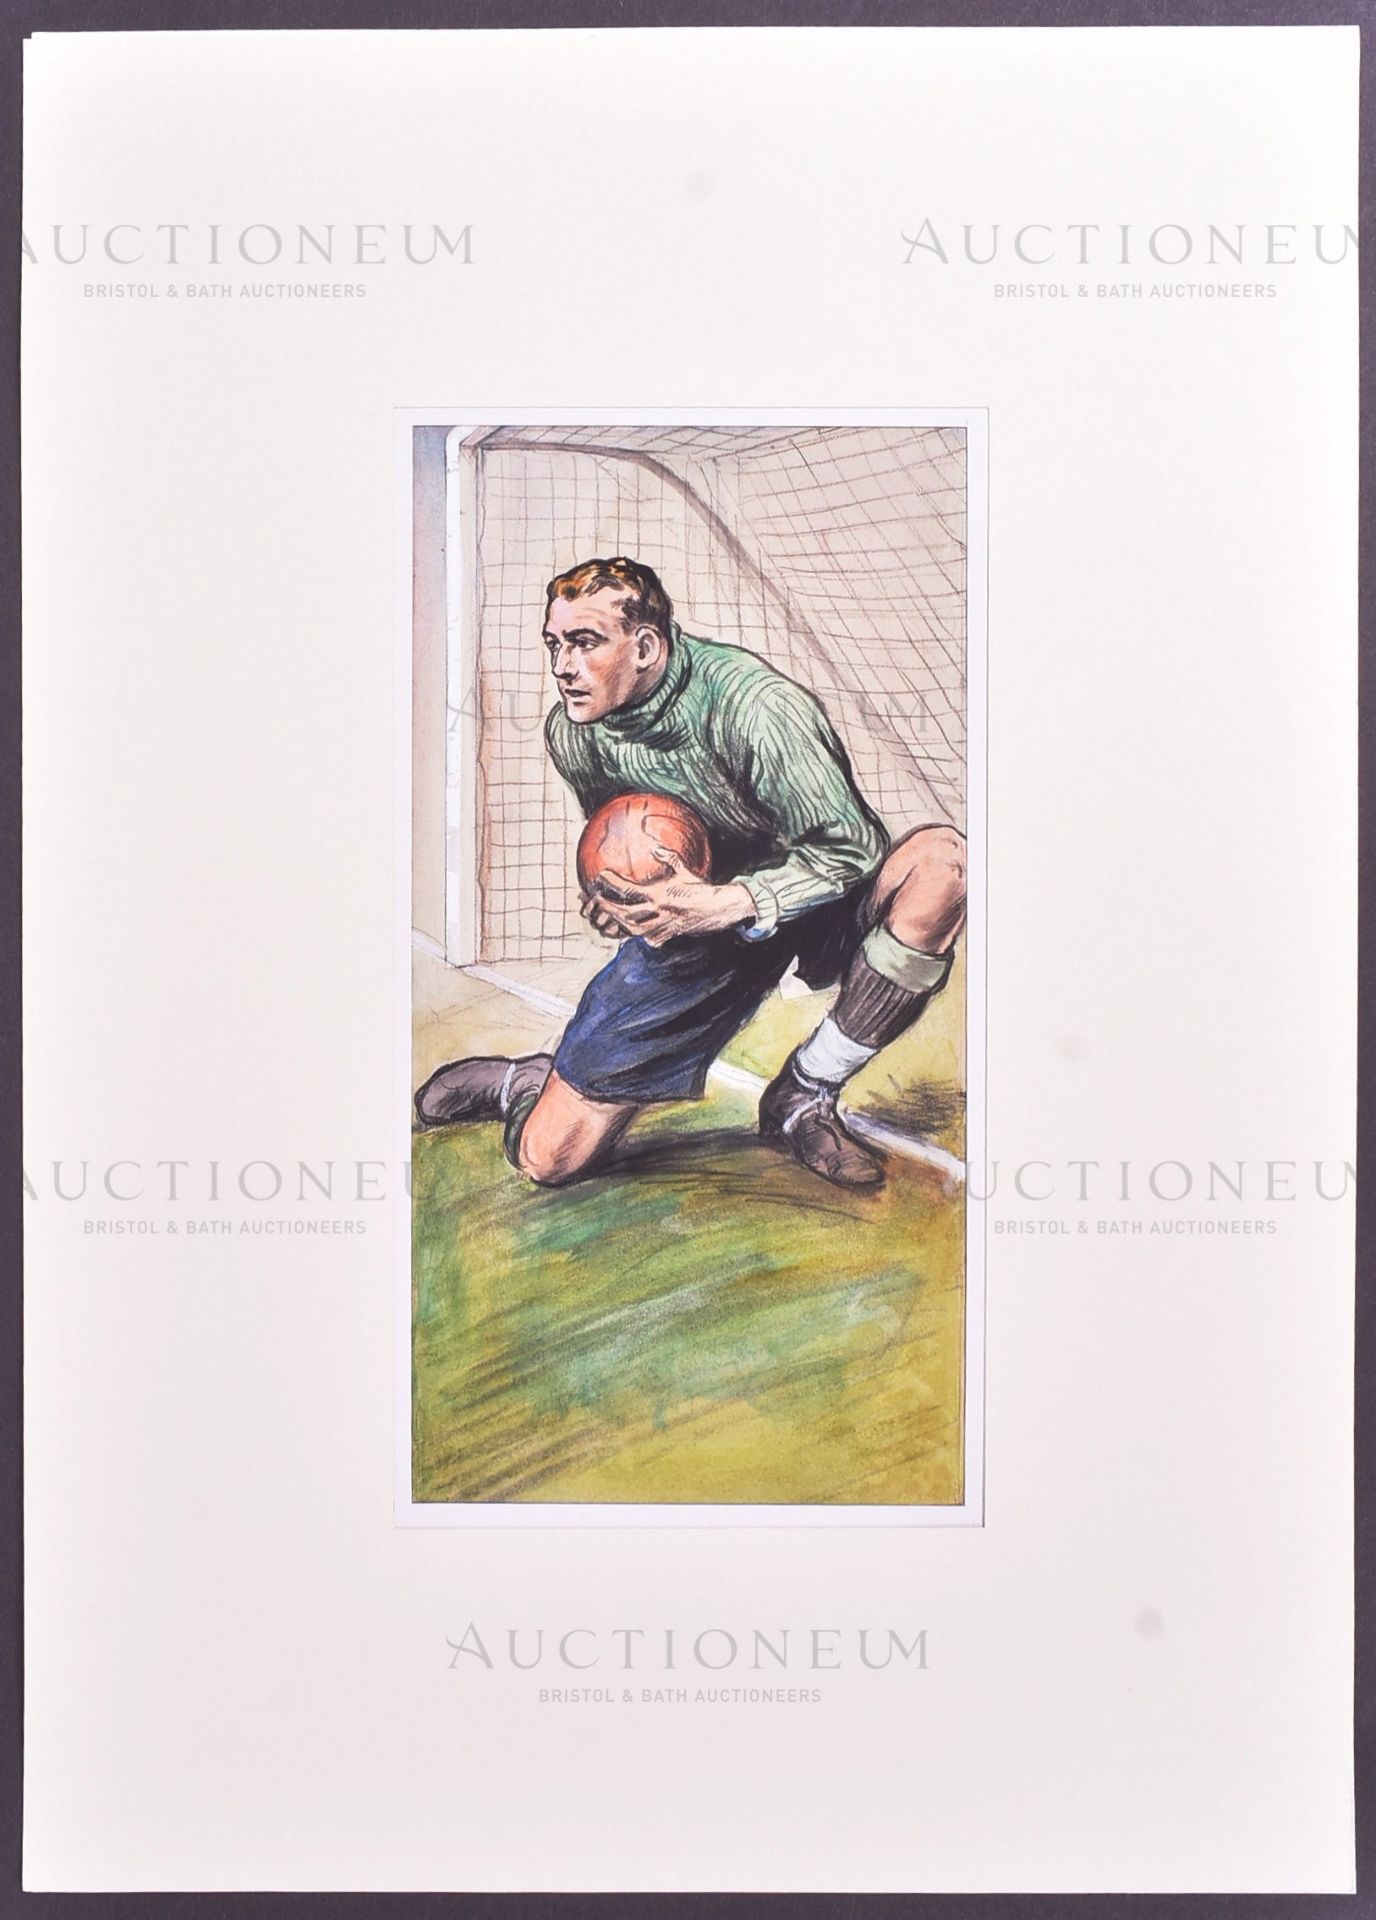 HINTS ON ASSOCIATION FOOTBALL (1934) - ORIGINAL CIGARETTE CARD ARTWORK - Image 2 of 3